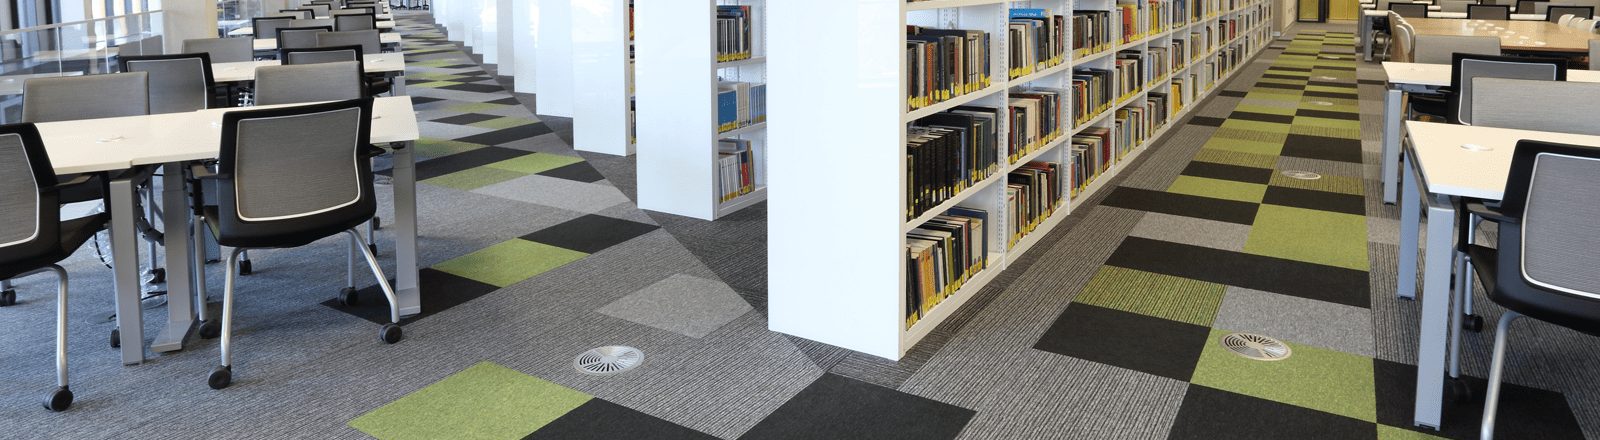 School Library with School Flooring in Birmingham